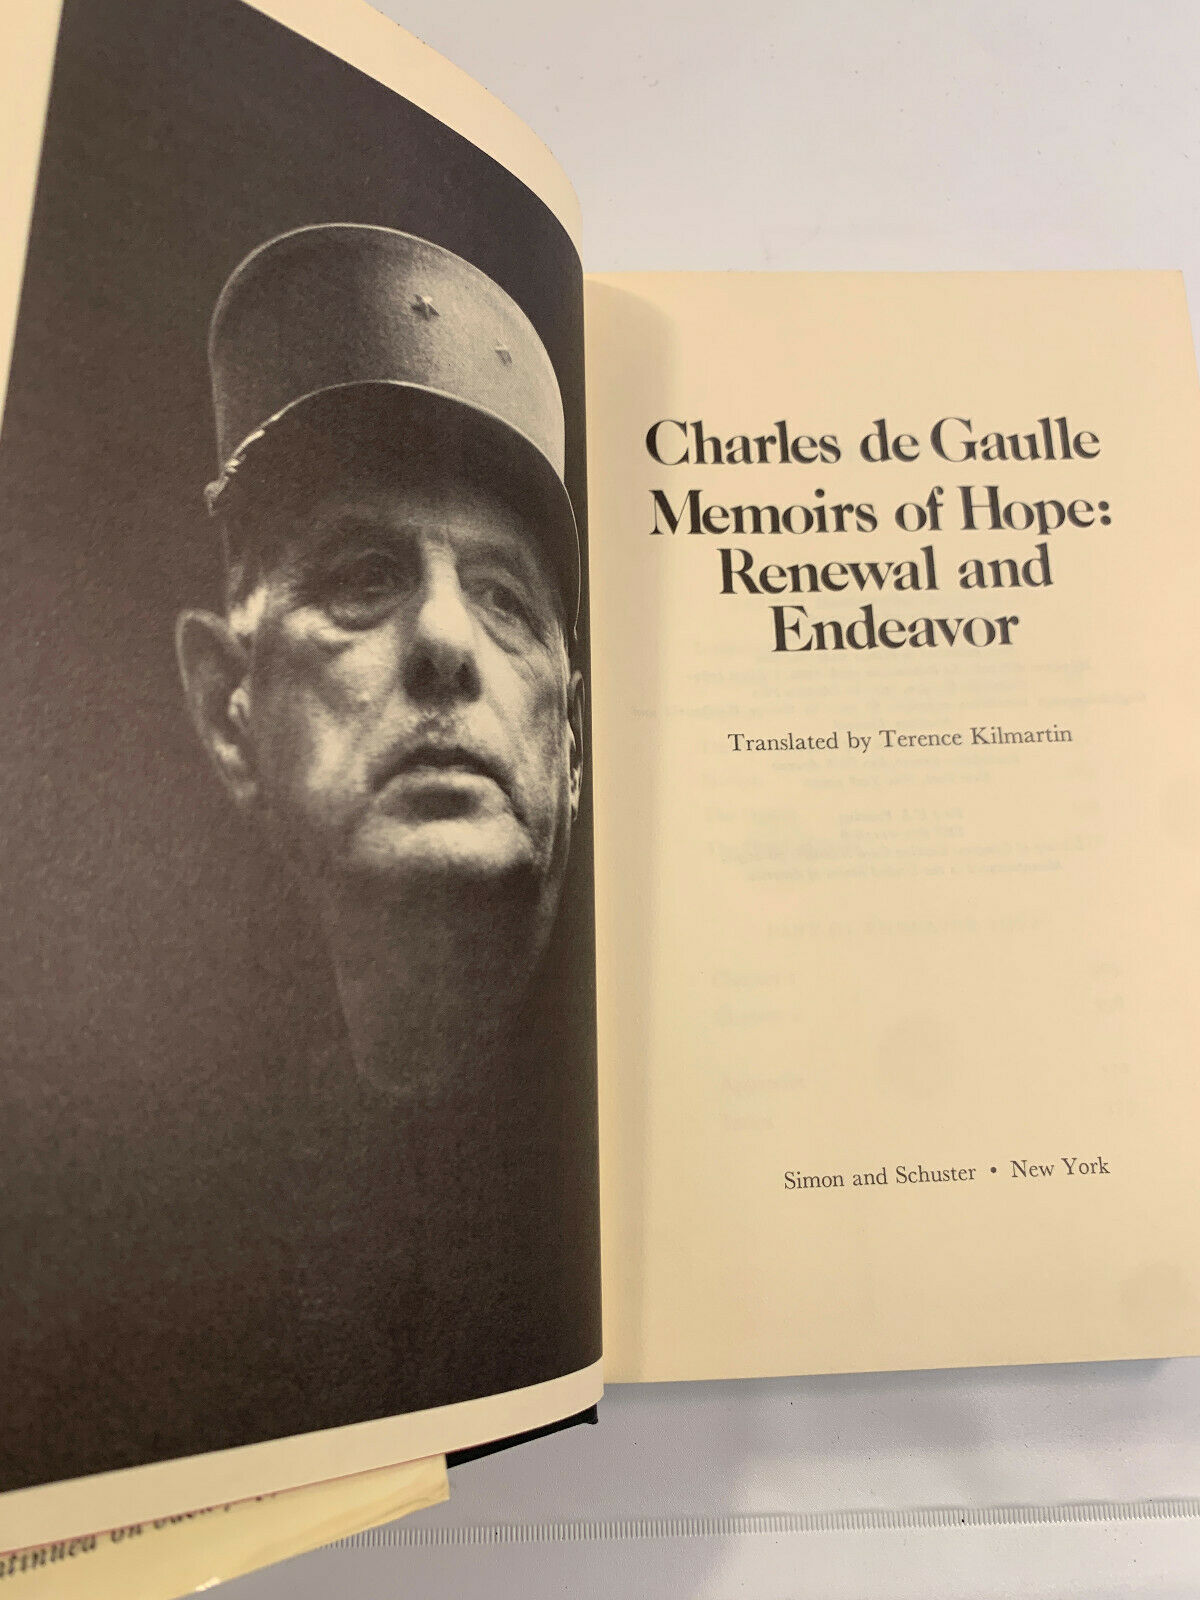 Charles de Gaulle Memoirs of Hope: Renewal and Endeavor